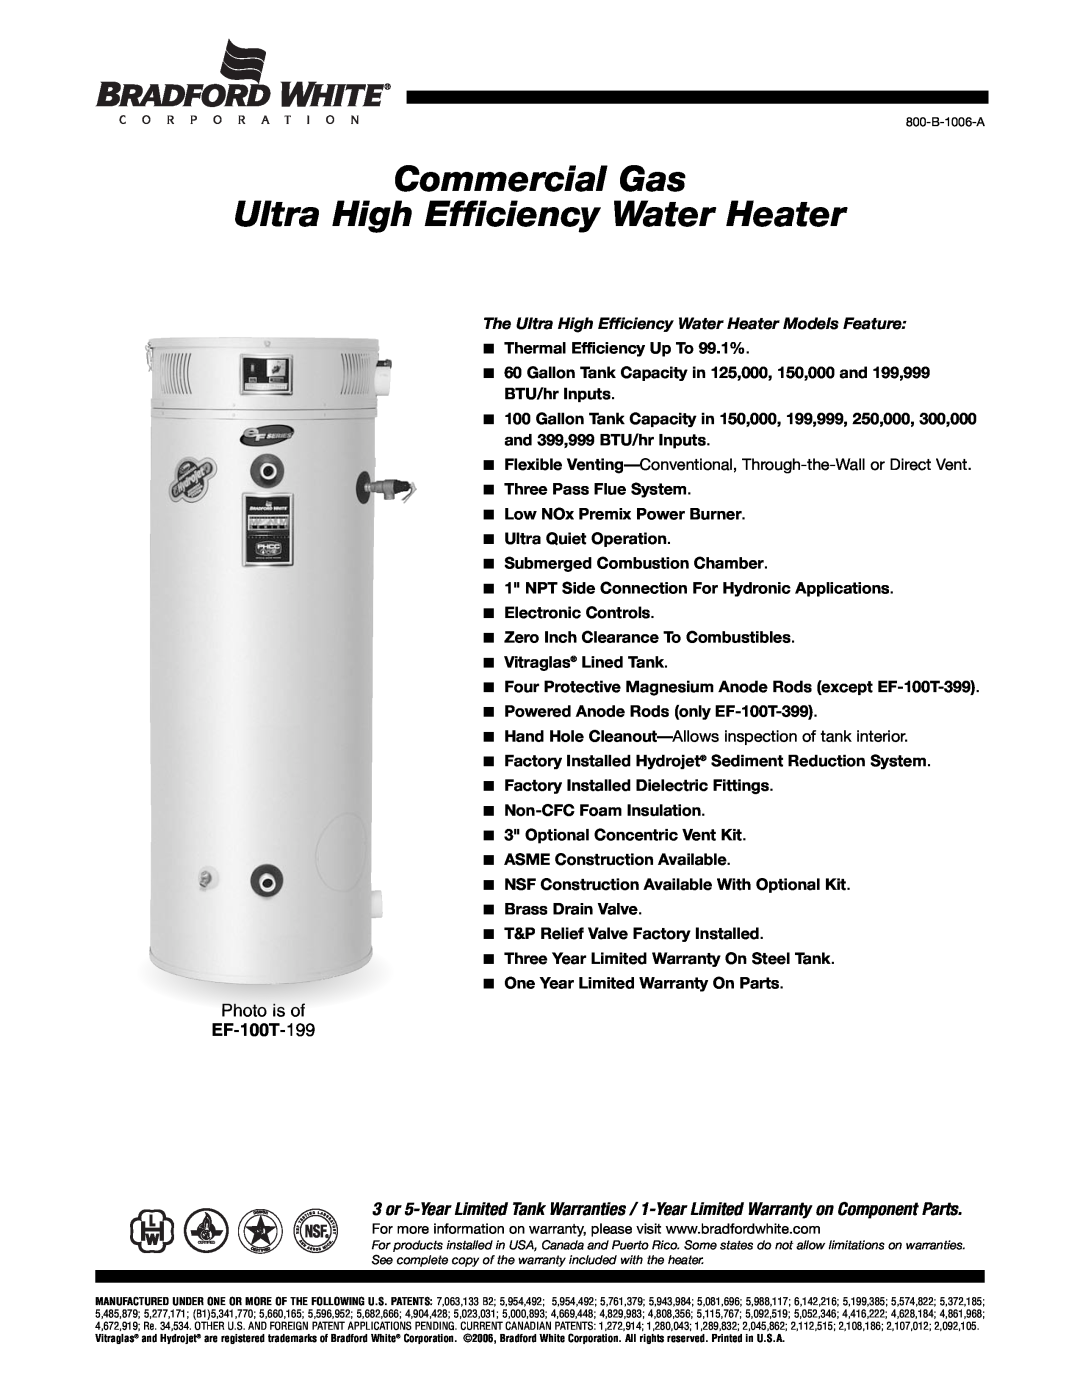 Bradford-White Corp EF-100T-199 warranty Commercial Gas Ultra High Efficiency Water Heater 